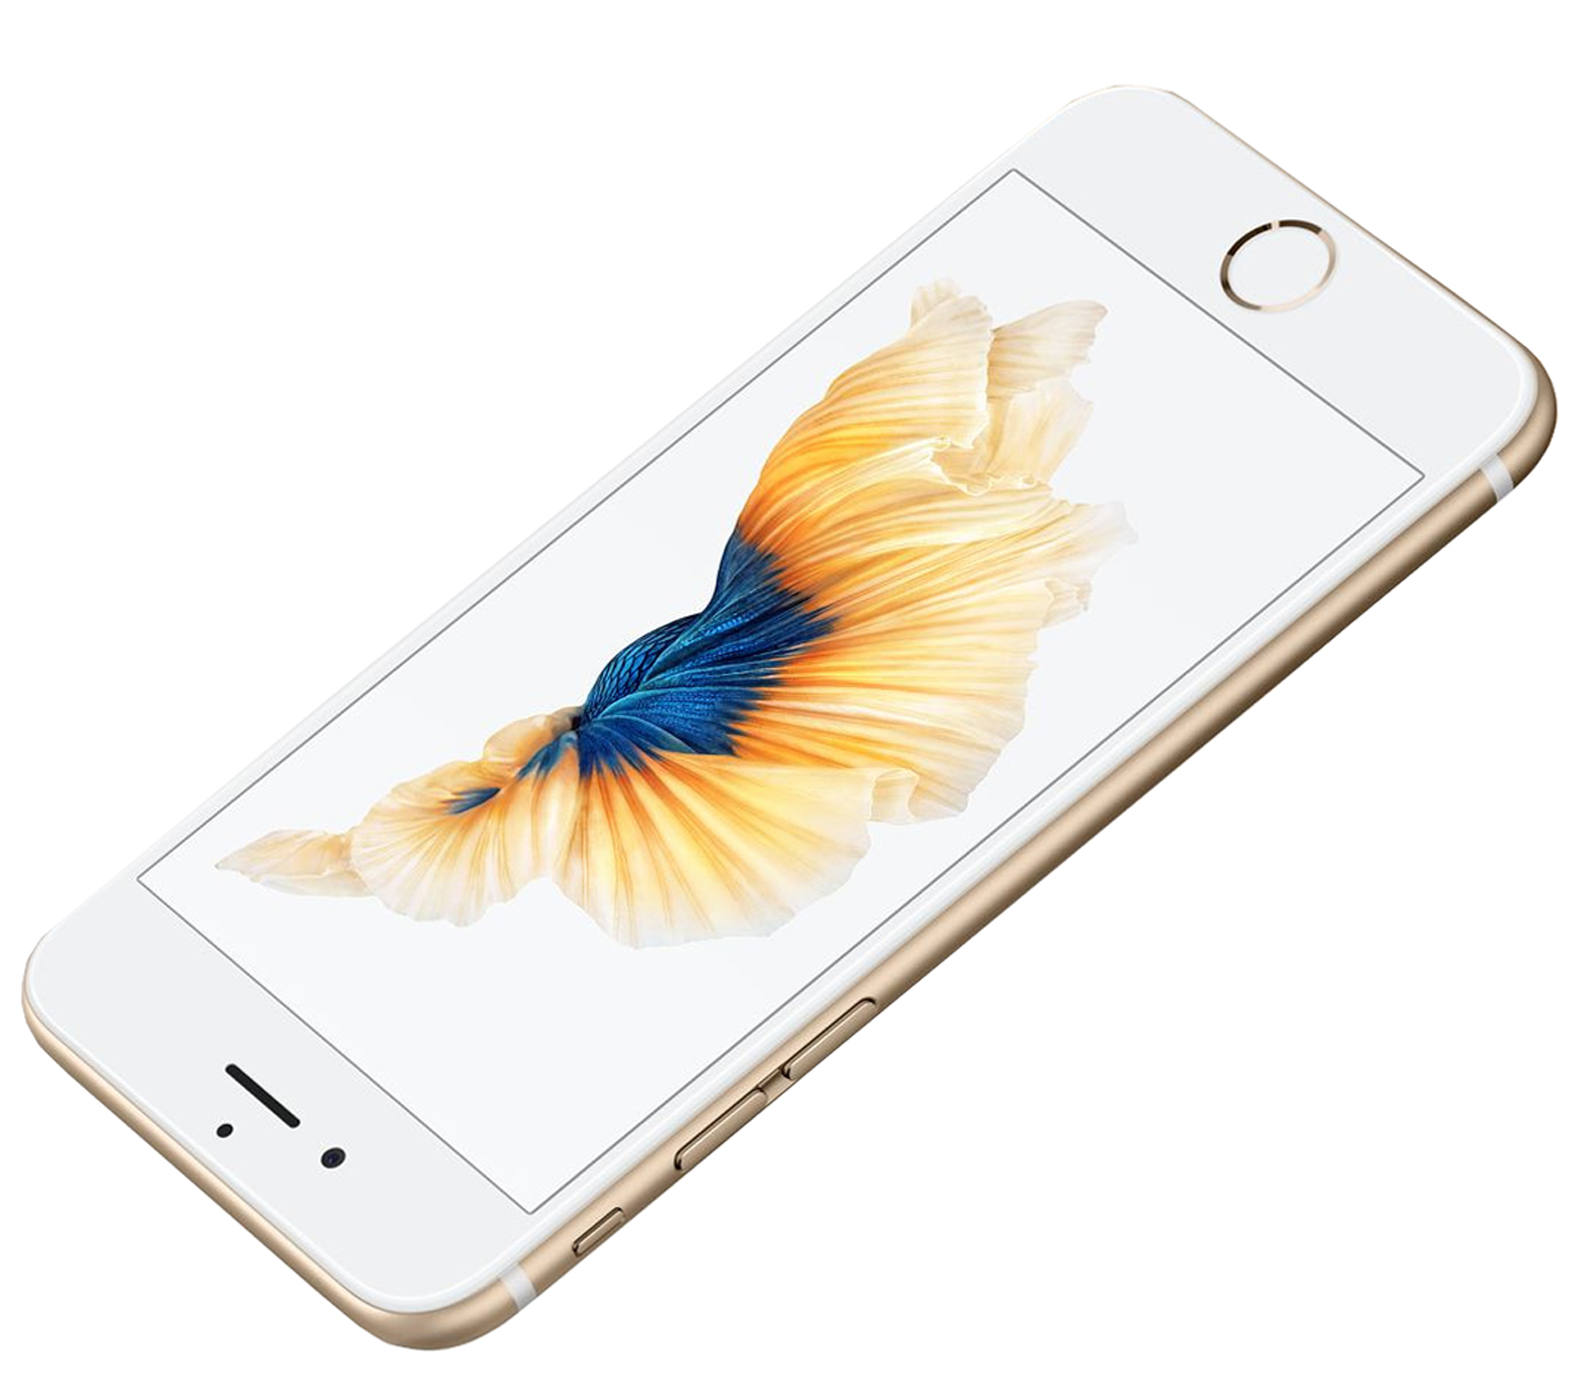 Apple iPhone 6S 128GB Gold (Bản quốc tế)